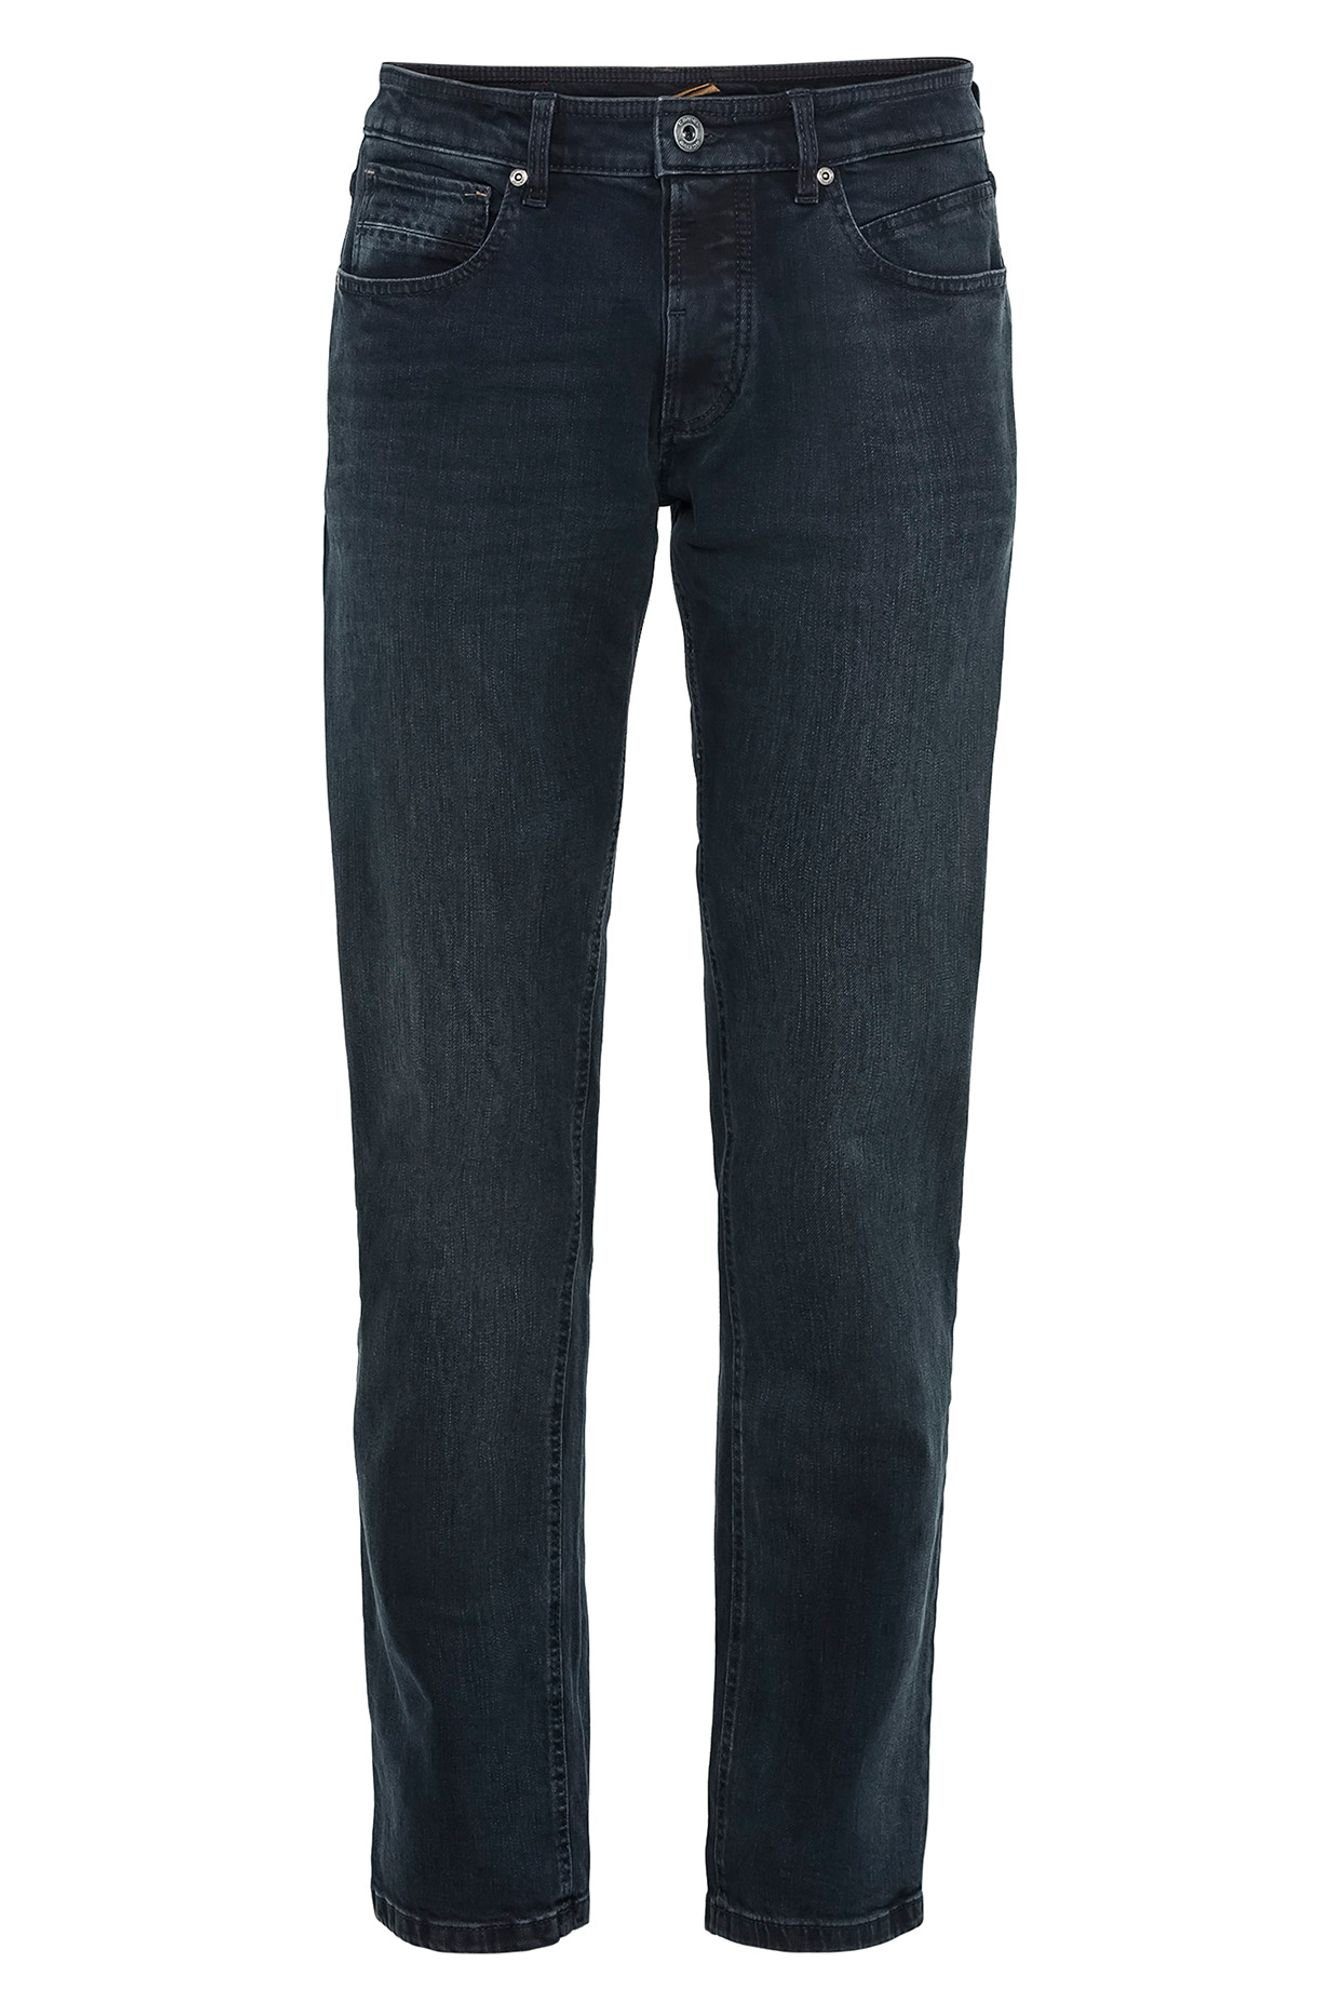 camel active 5-Pocket-Jeans »Woodstock 488695-9+99« gerades Bein, normale  Leibhöhe online kaufen | OTTO